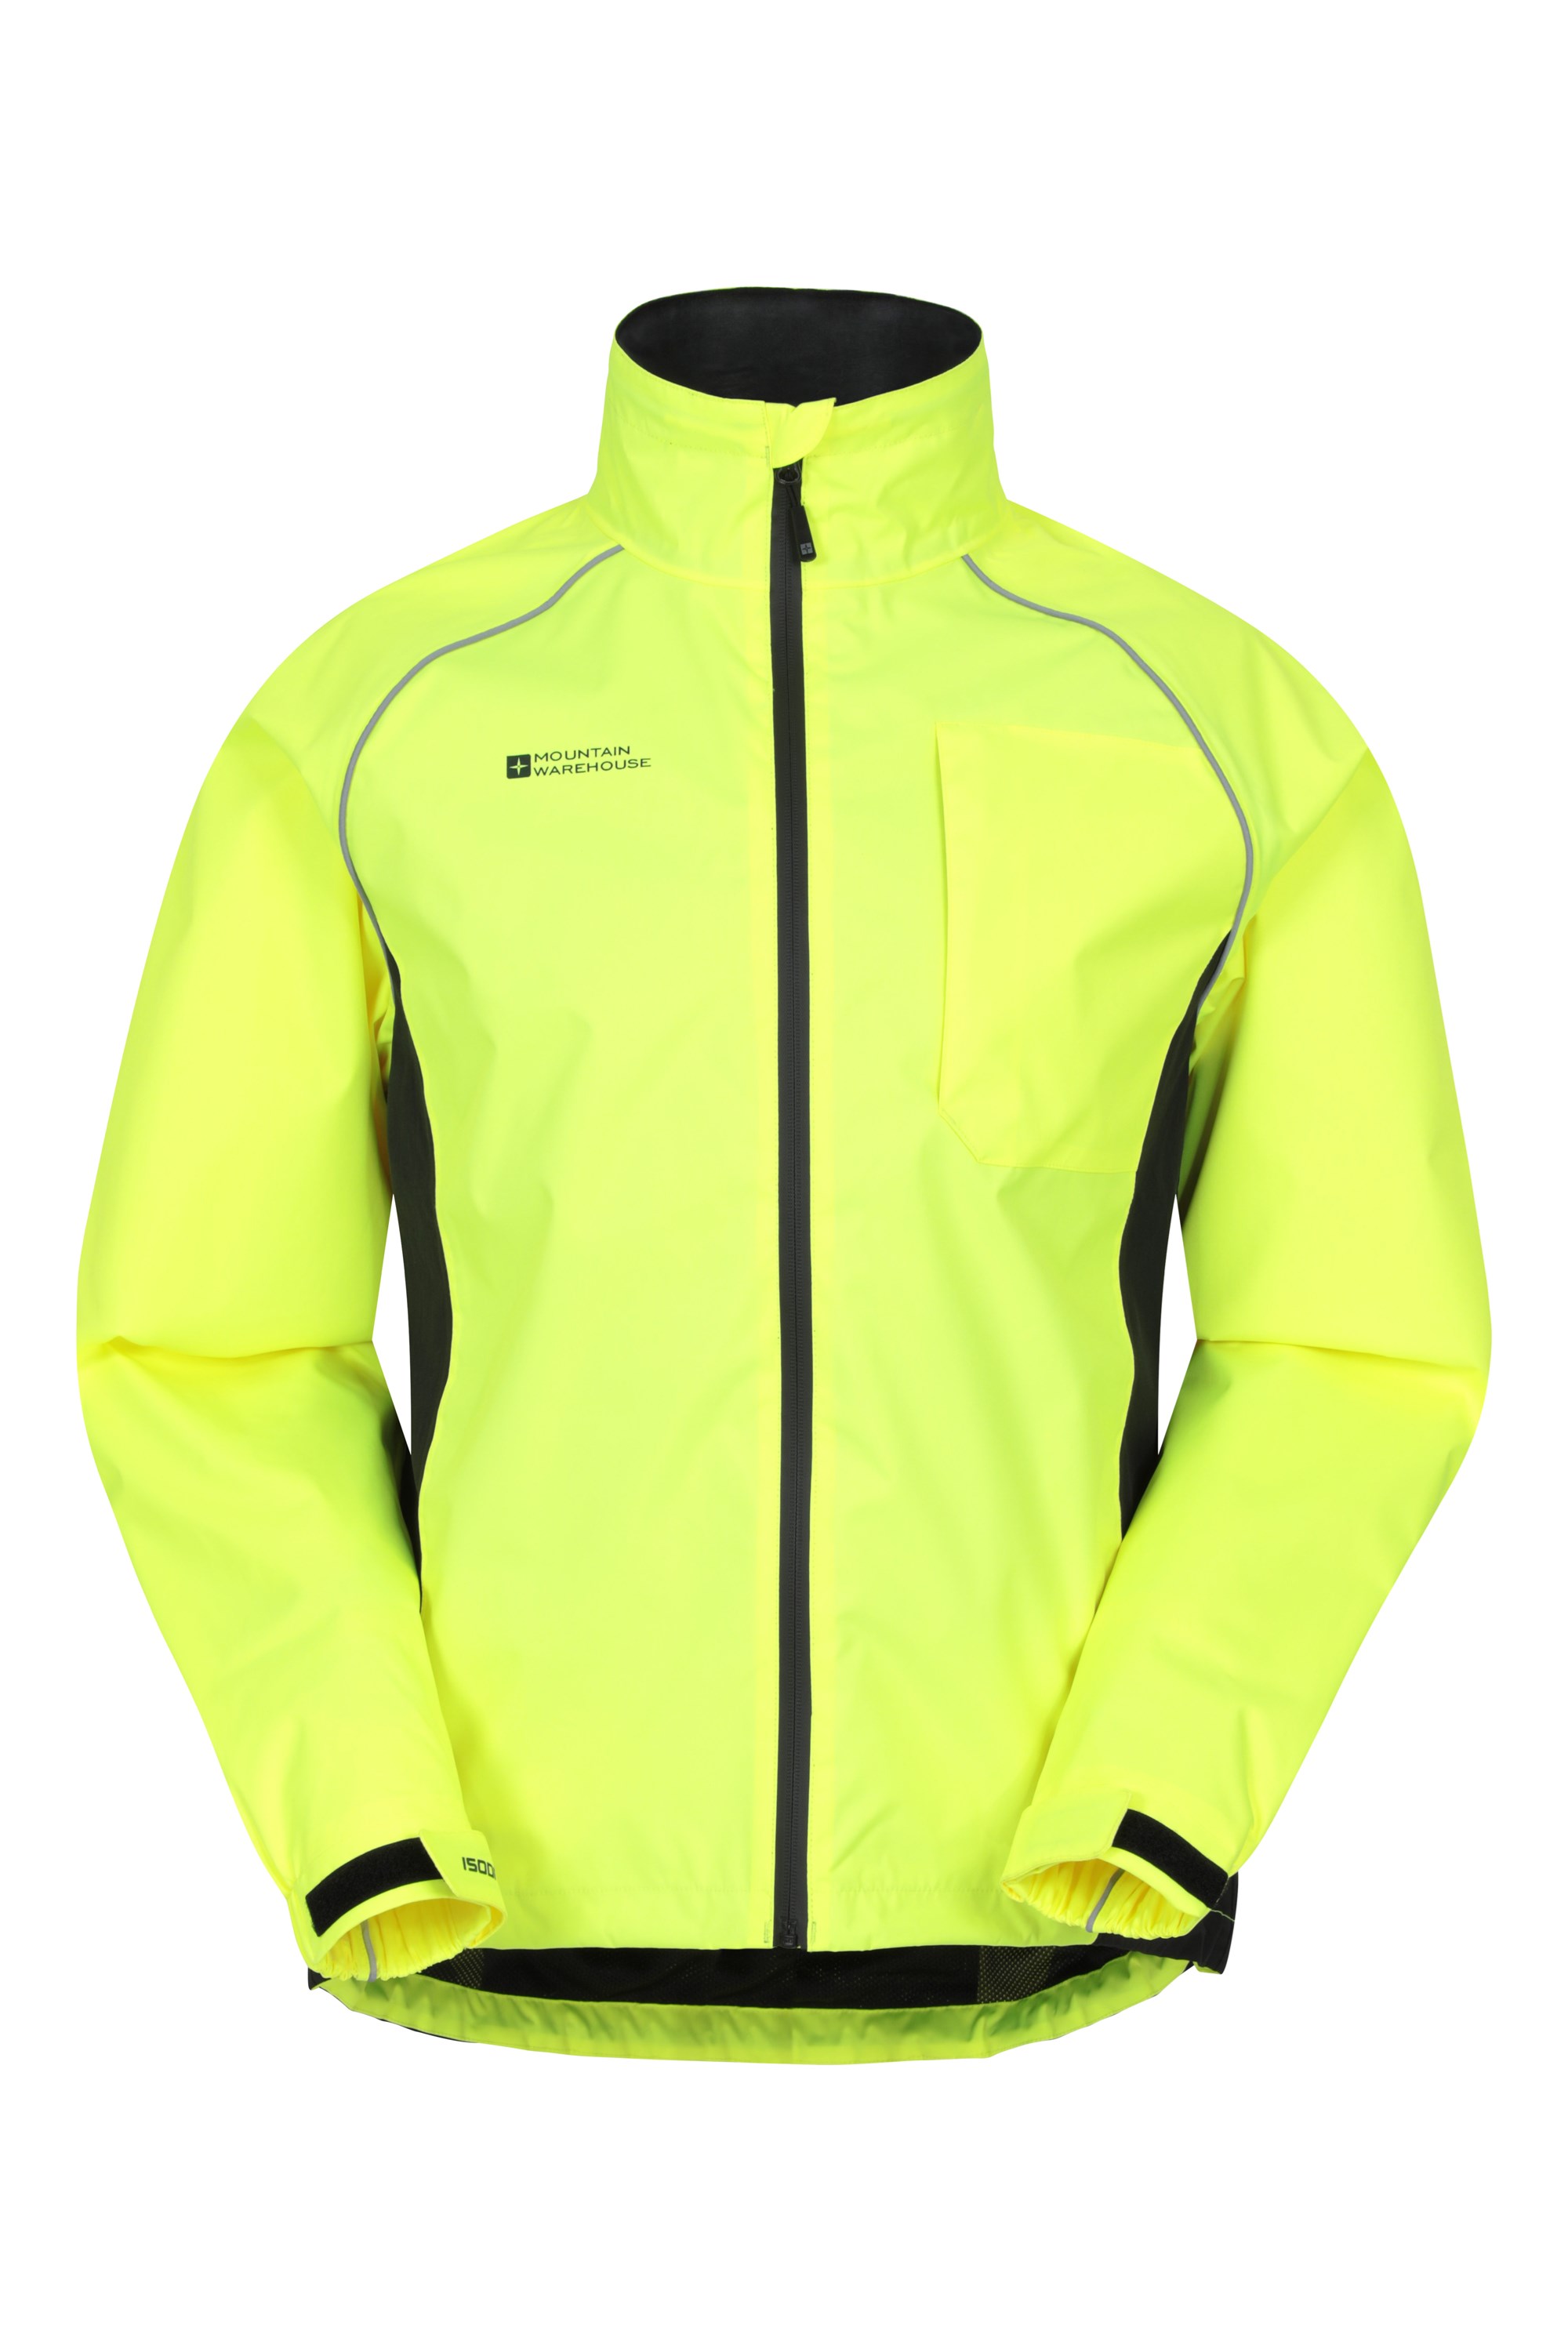 Mens Cycling /Running Rain Jacket High Visibility Breathable Wind/ Waterproof 